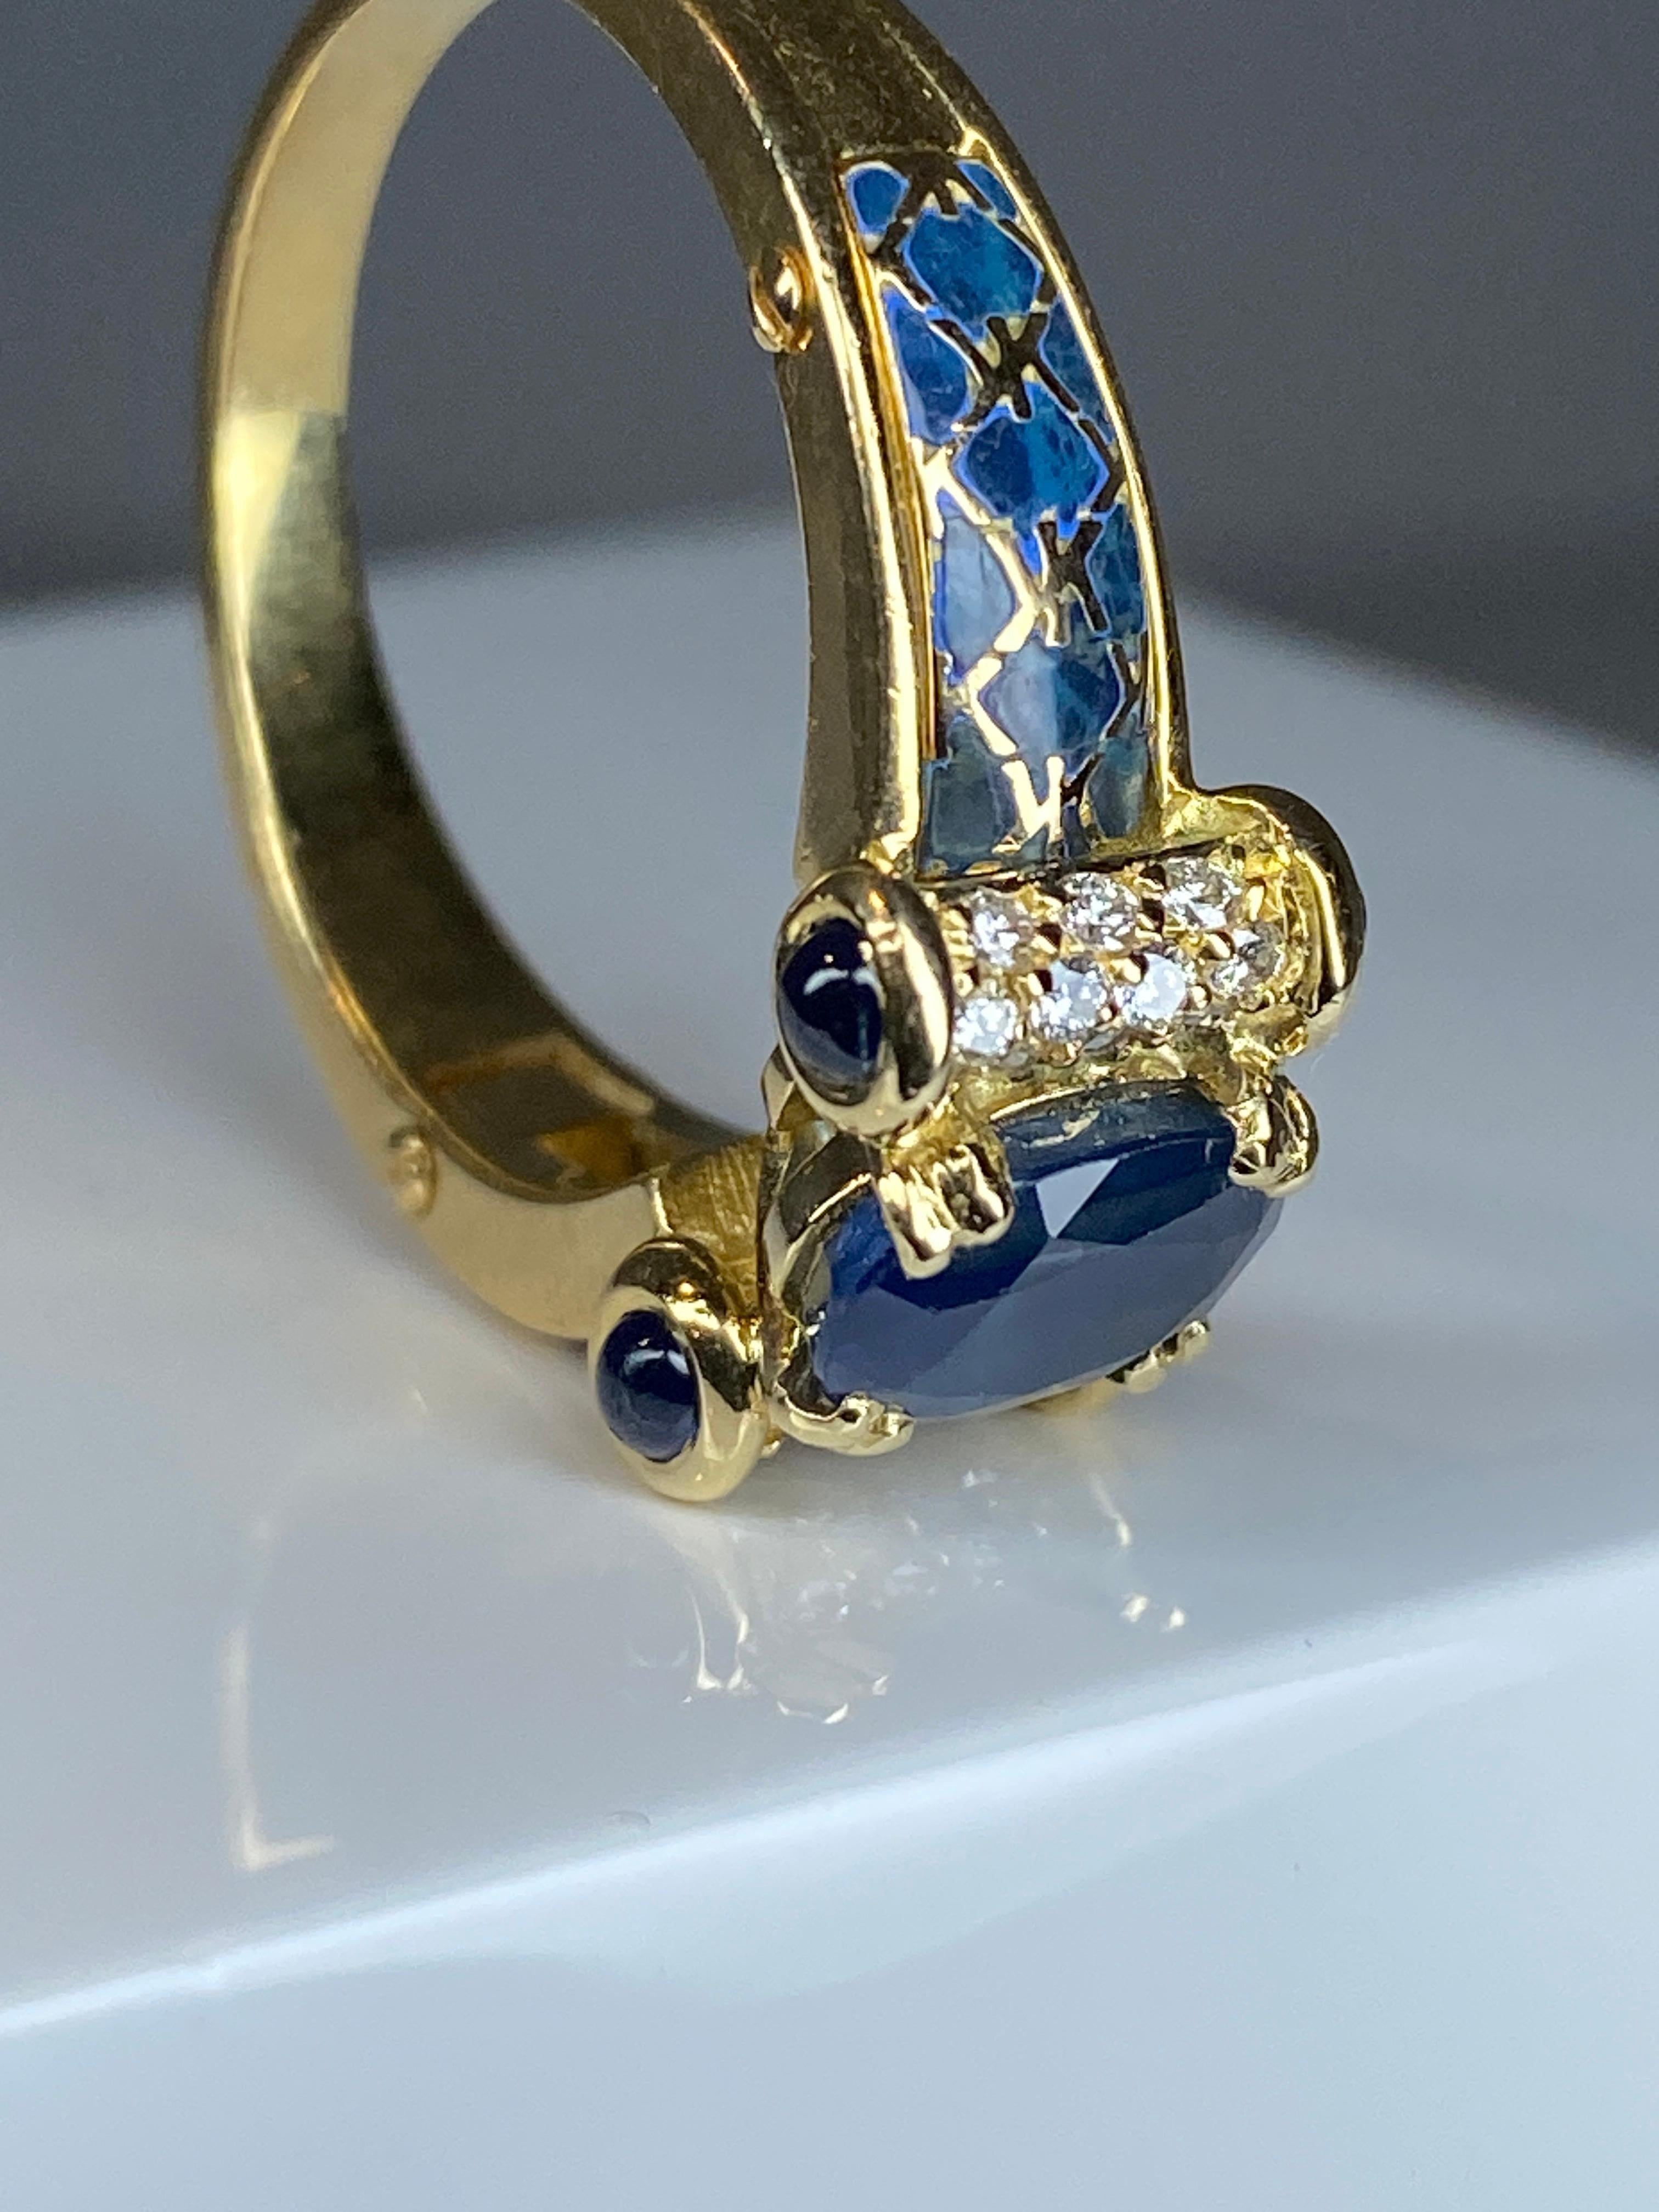 Korloff Ring in 18 Carat Gold: Sapphires, Diamonds, Blue Enamel For Sale 5